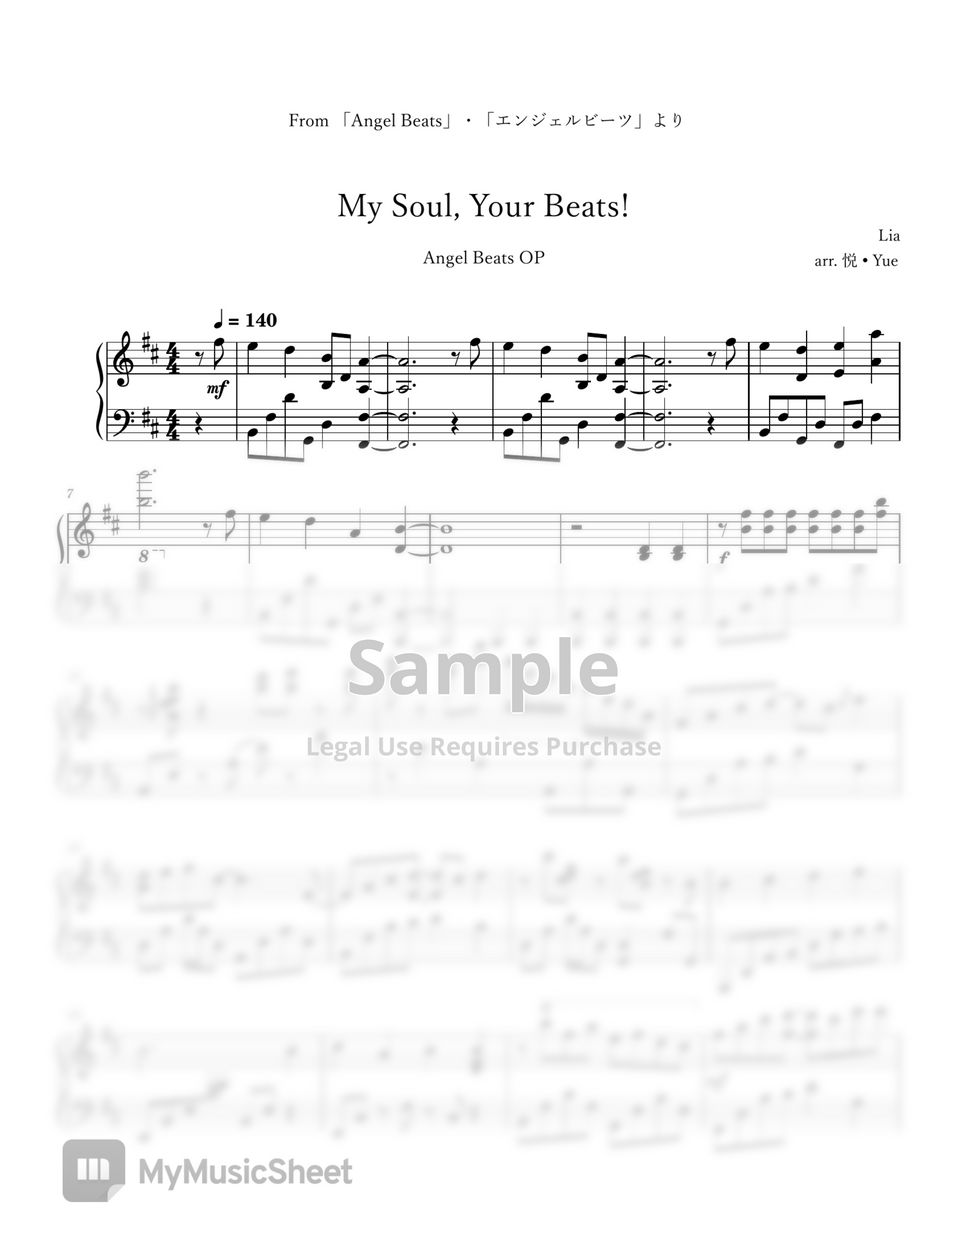 Lia - Angel Beats OP 「My Soul, Your Beats!」 Piano (arrangement) by 悦 • Yue